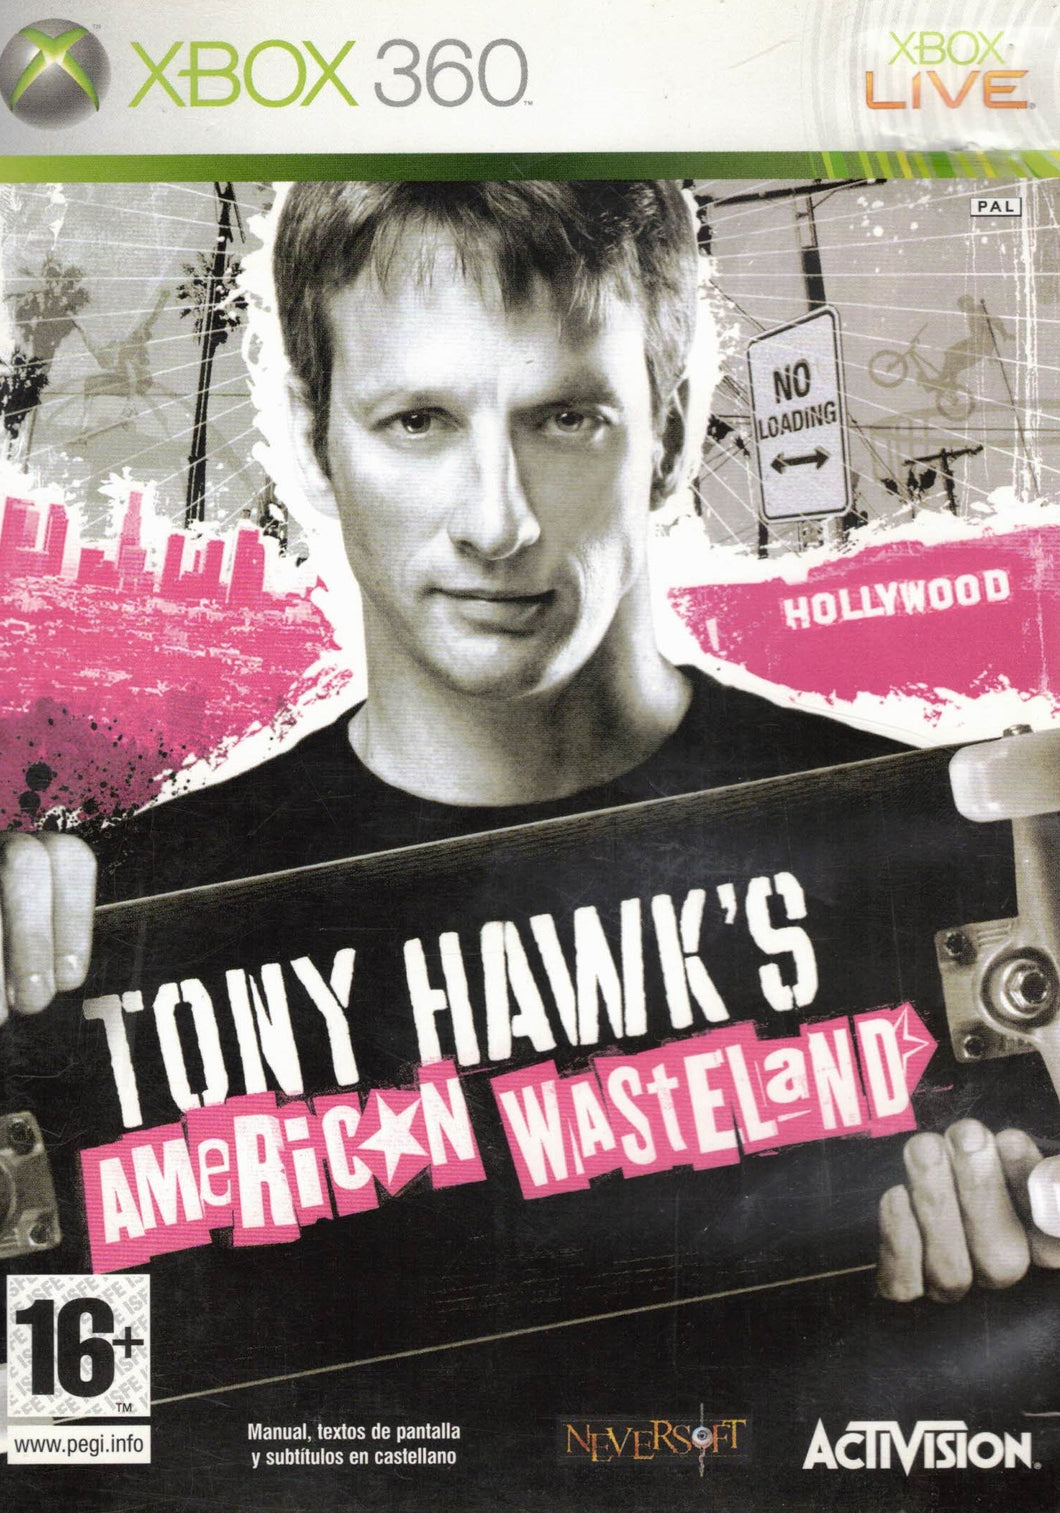 Tony Hawks American Wasteland (XBOX 360) (very good second-hand)